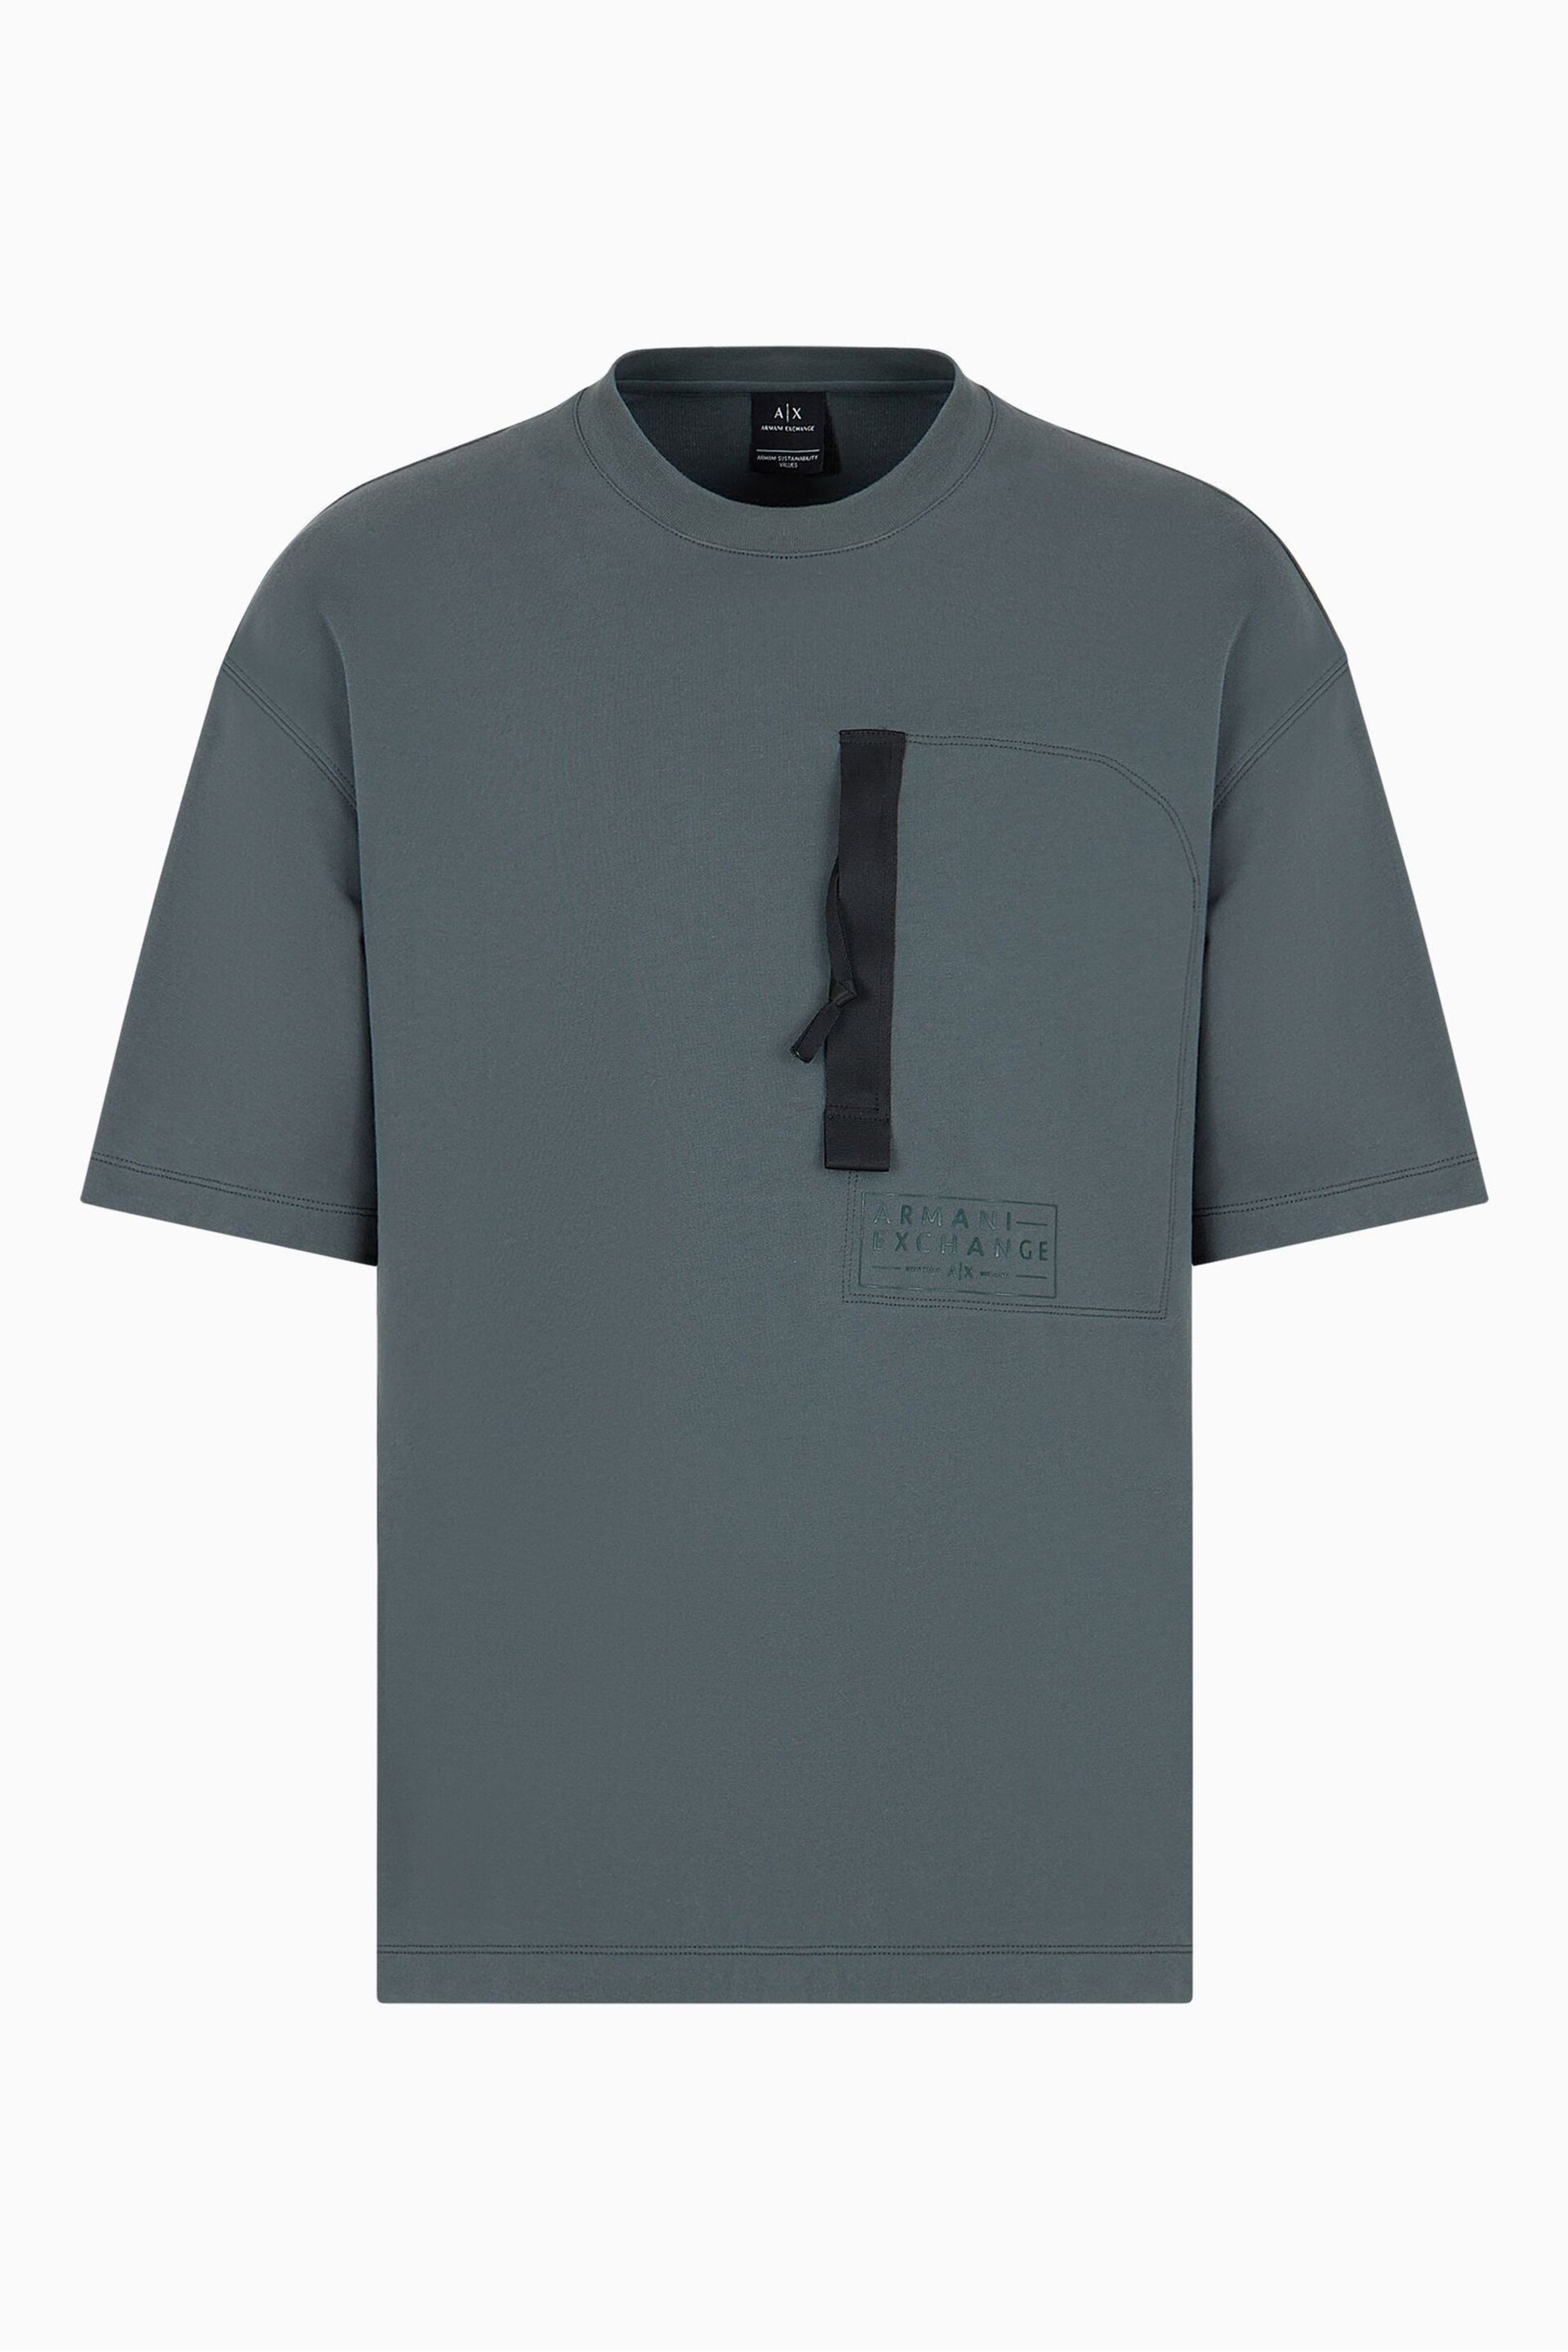 Armani Exchange Oversize Grey Utility Pocket T-Shirt - Image 5 of 5